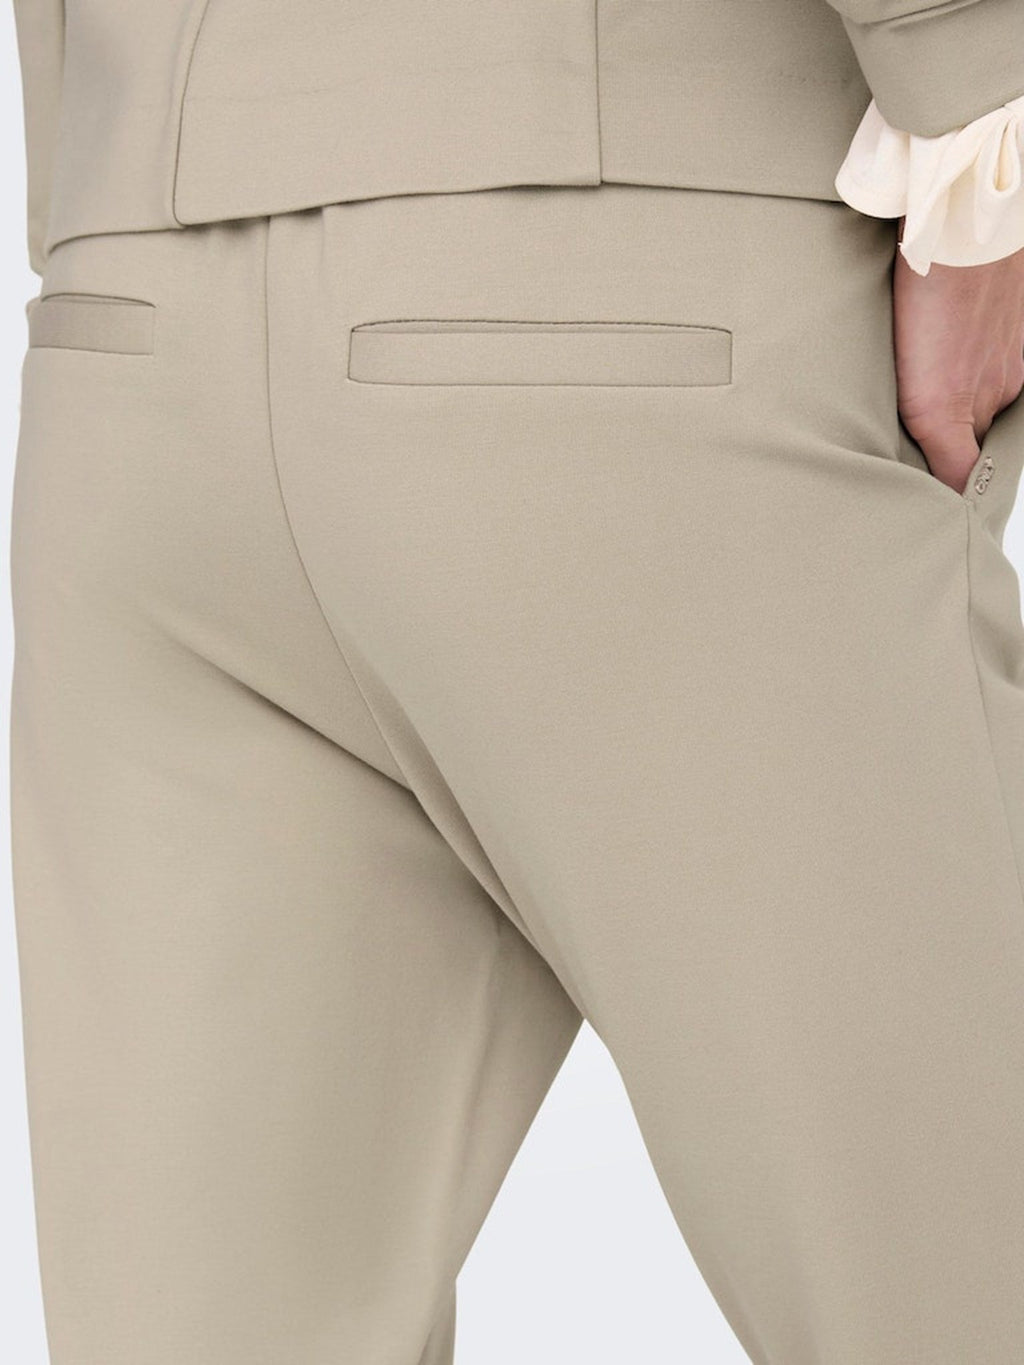 Pantalones de poptrash - cachemira pura